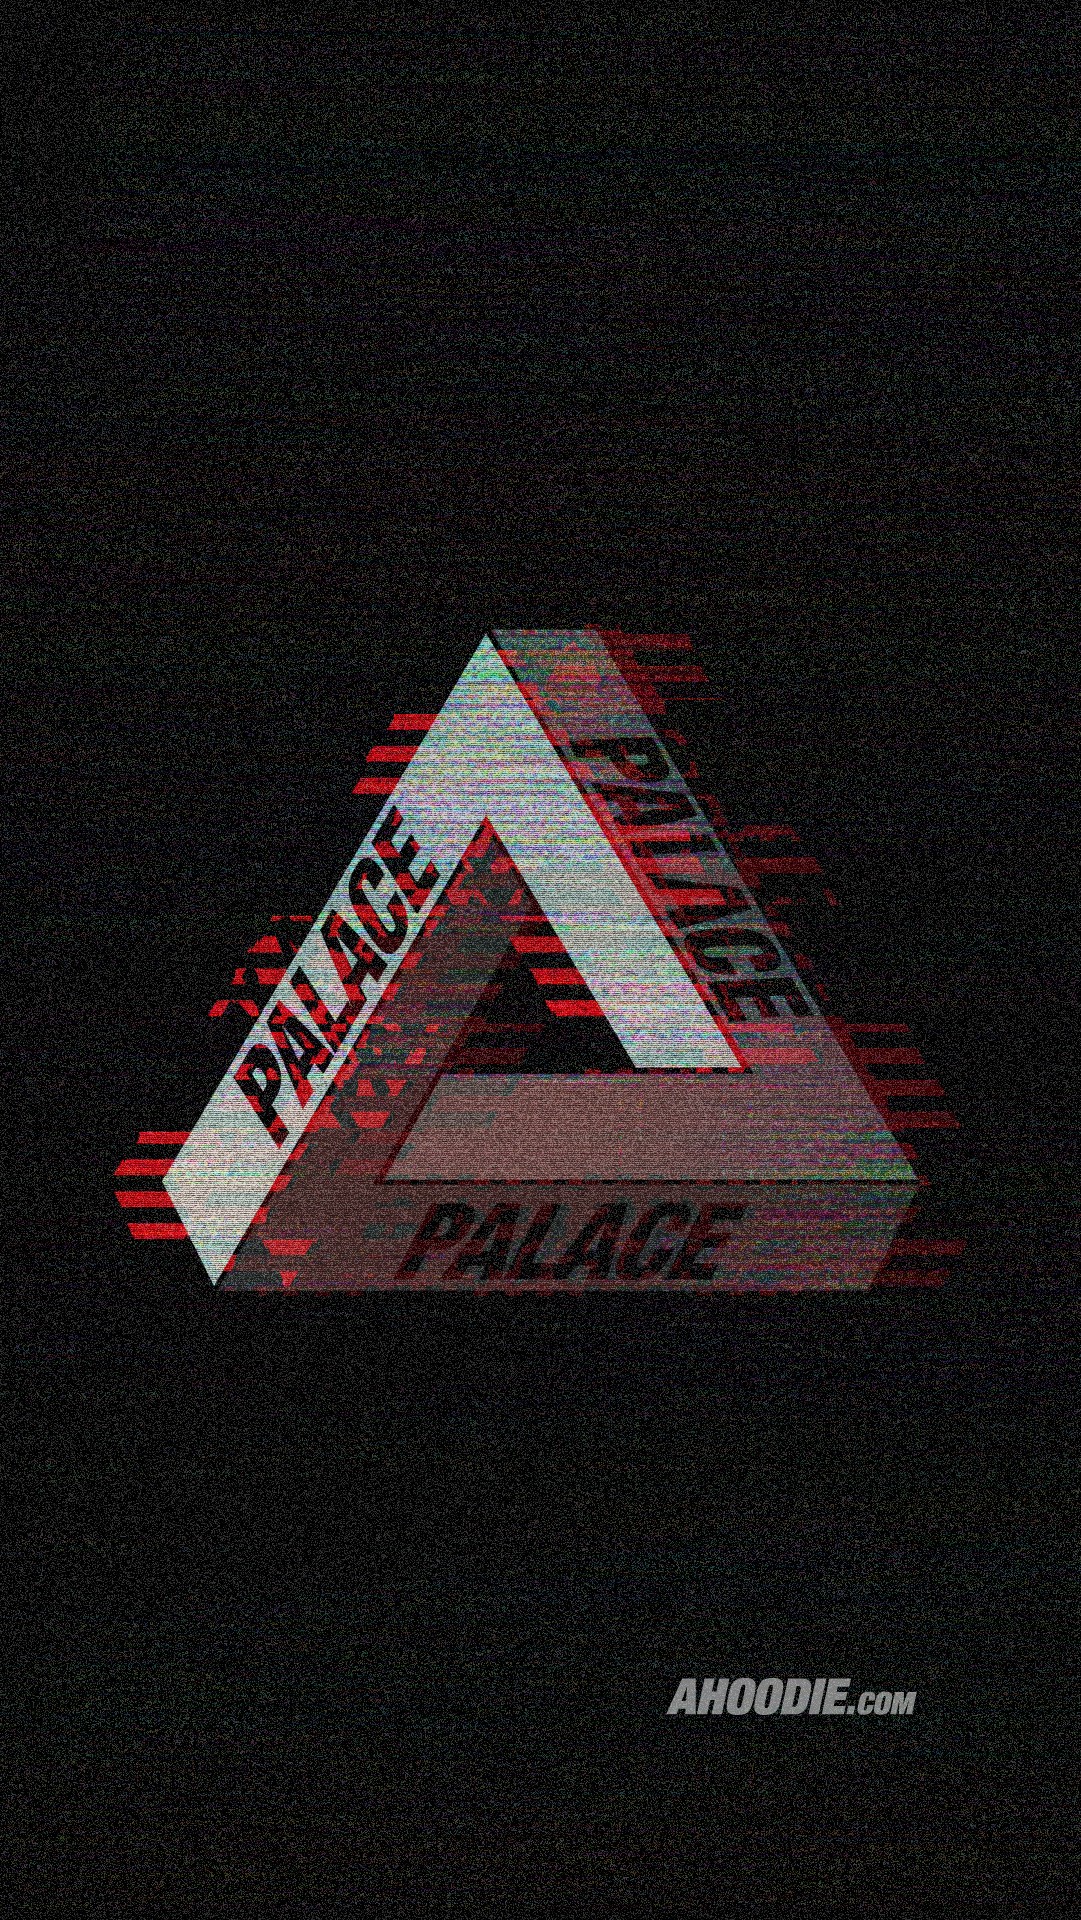 Palace Skateboards "VHS Glitch" Wallpapers